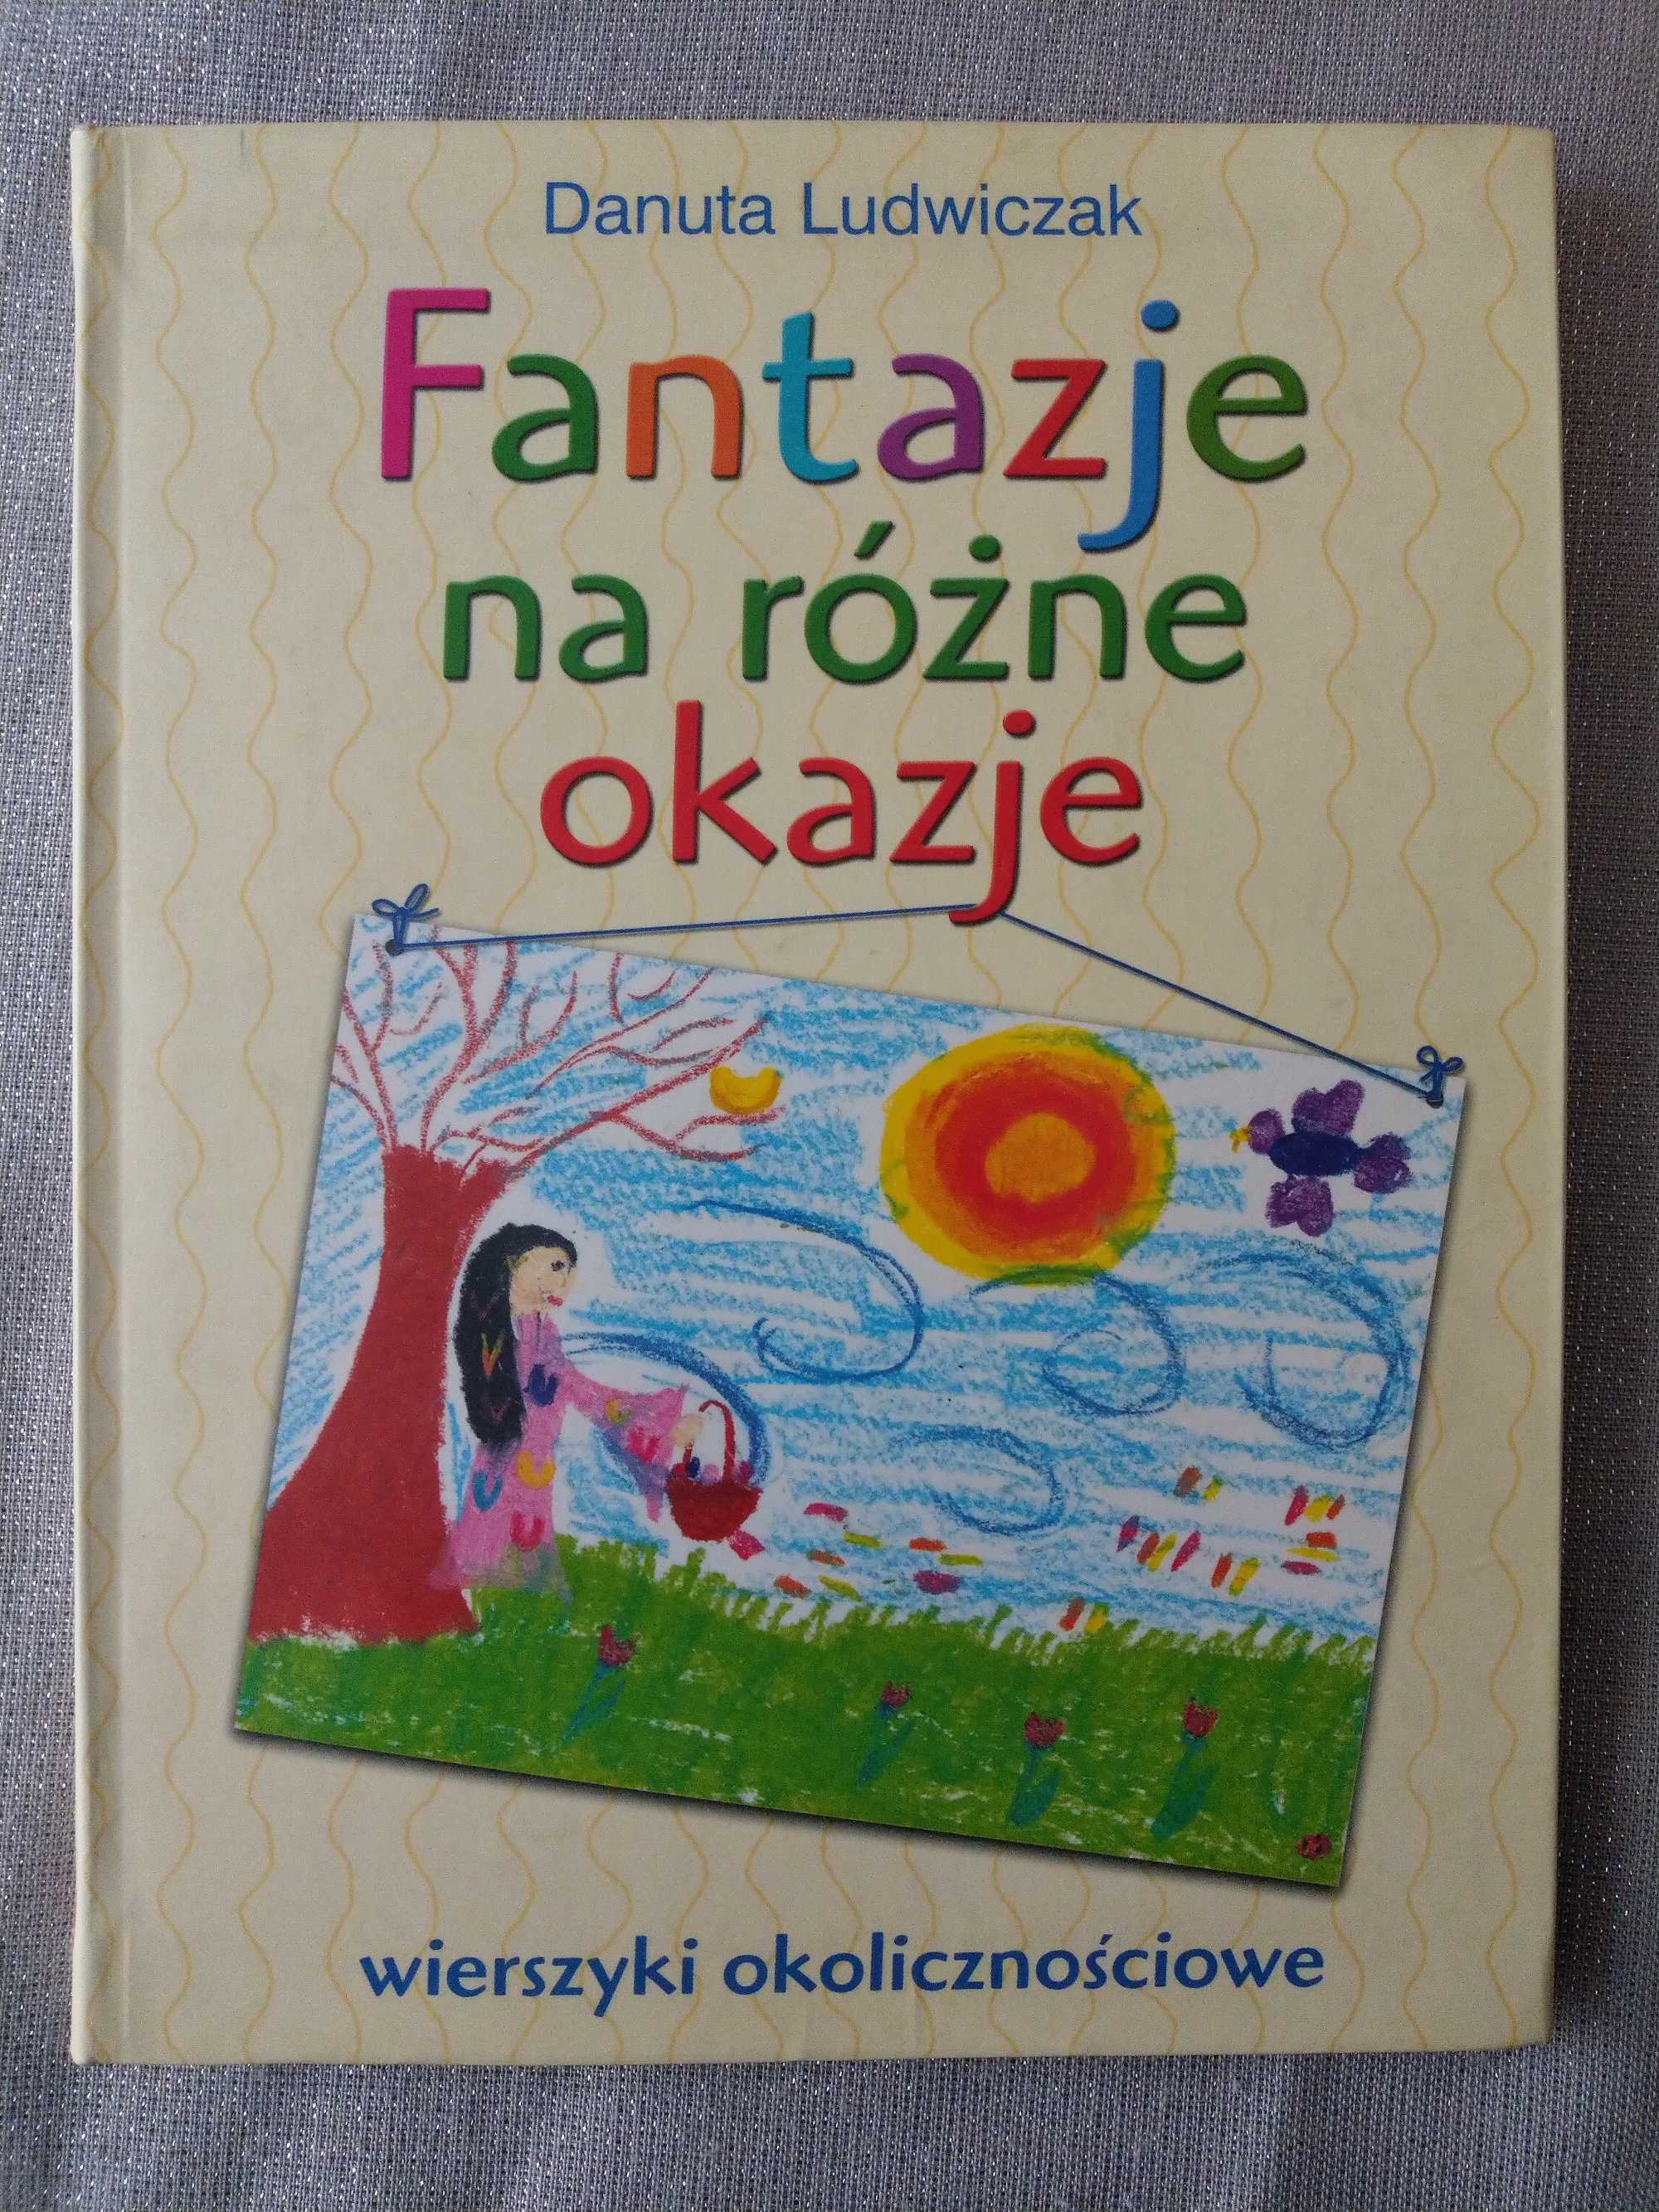 Książka "Fantazje na różne okazje" Danuta Ludwiczak